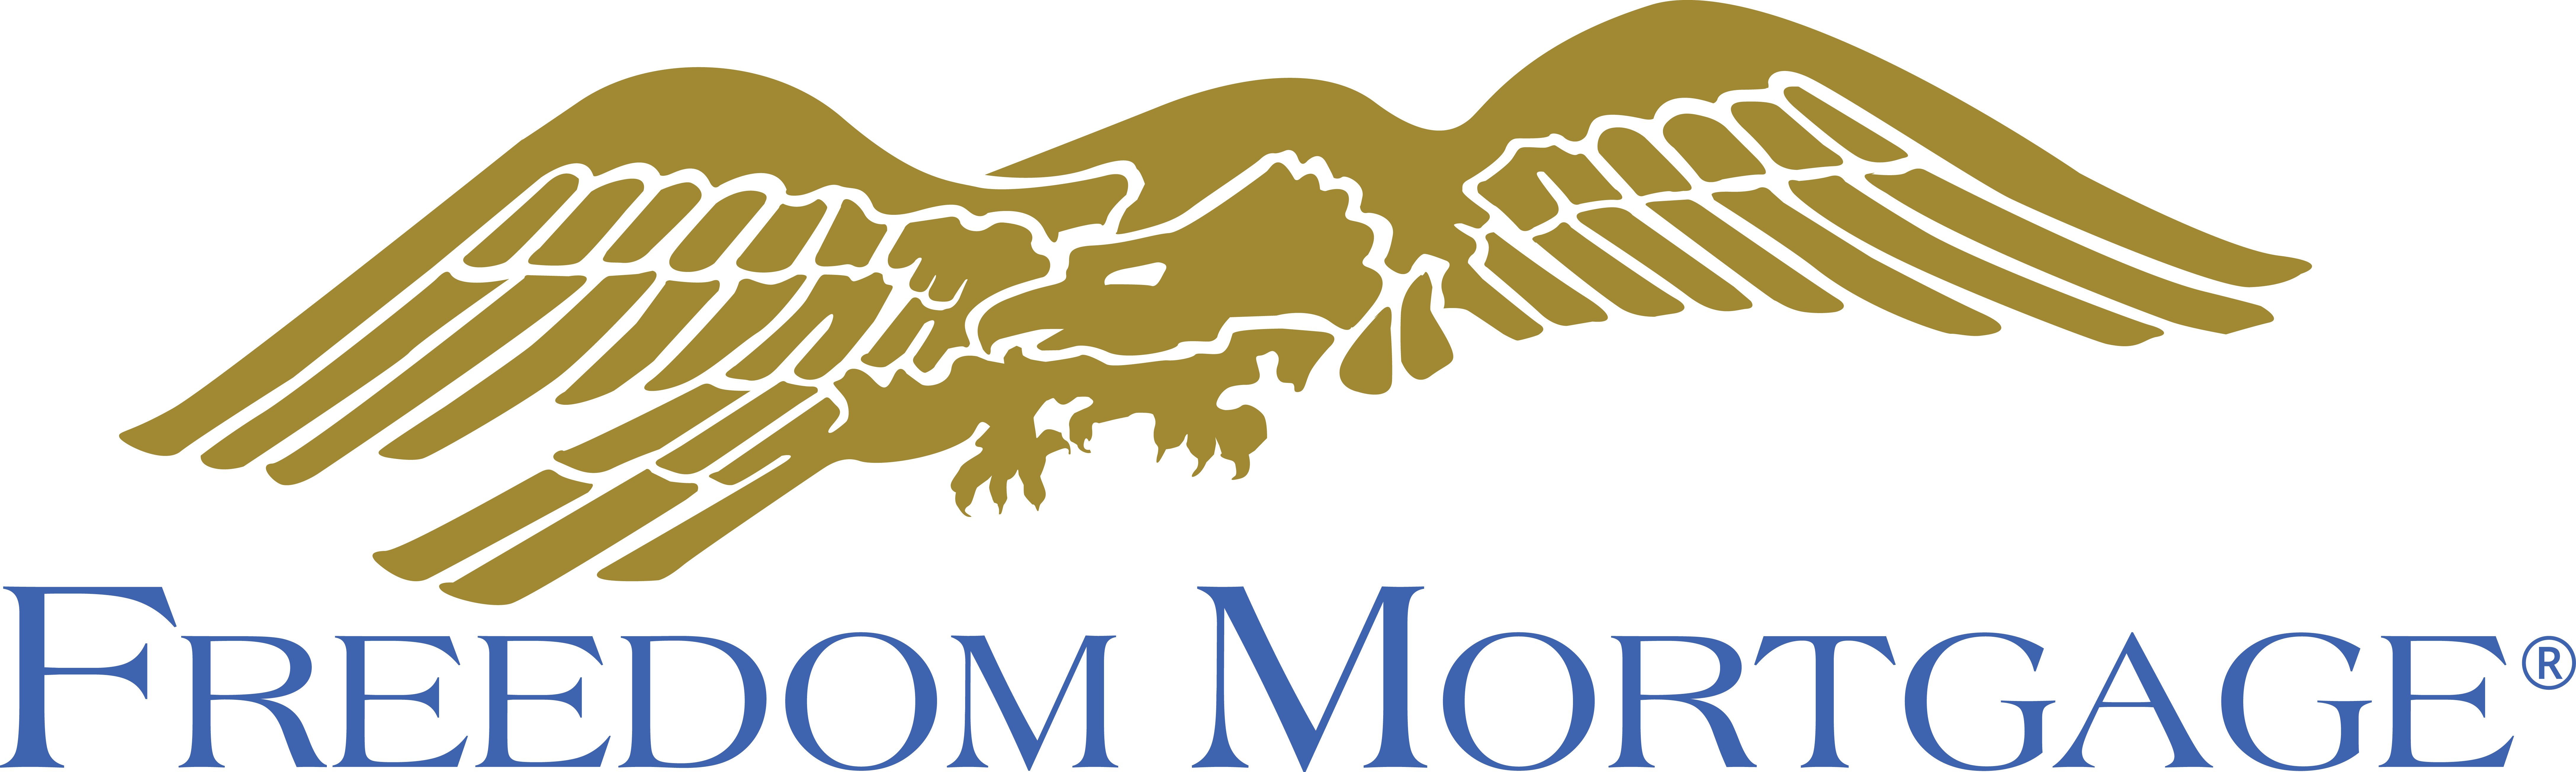 Freedom Mortgage Company Logo